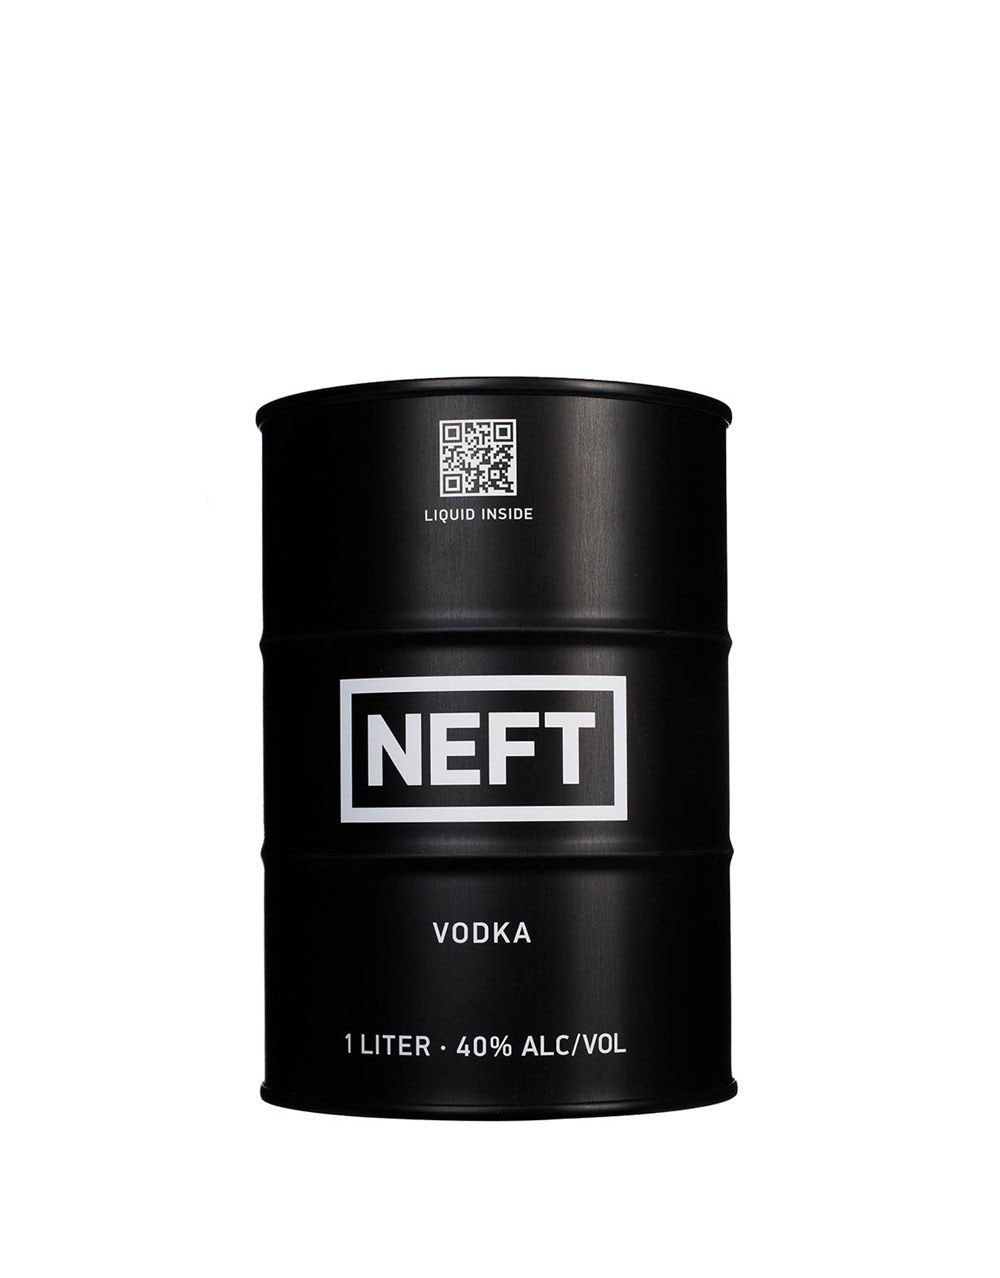 NEFT Black Vodka